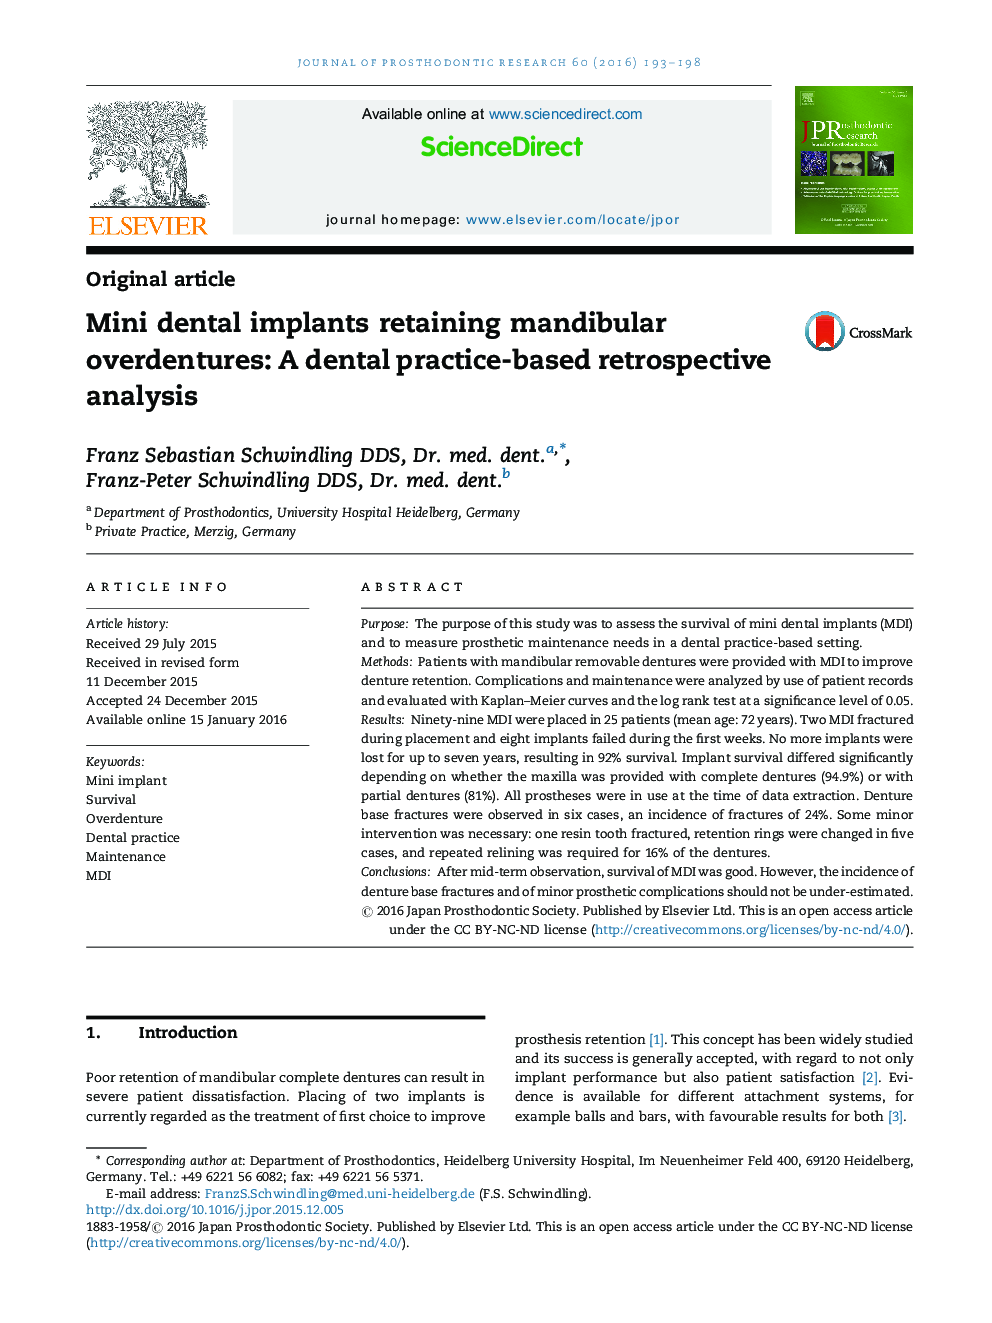 Mini dental implants retaining mandibular overdentures: A dental practice-based retrospective analysis